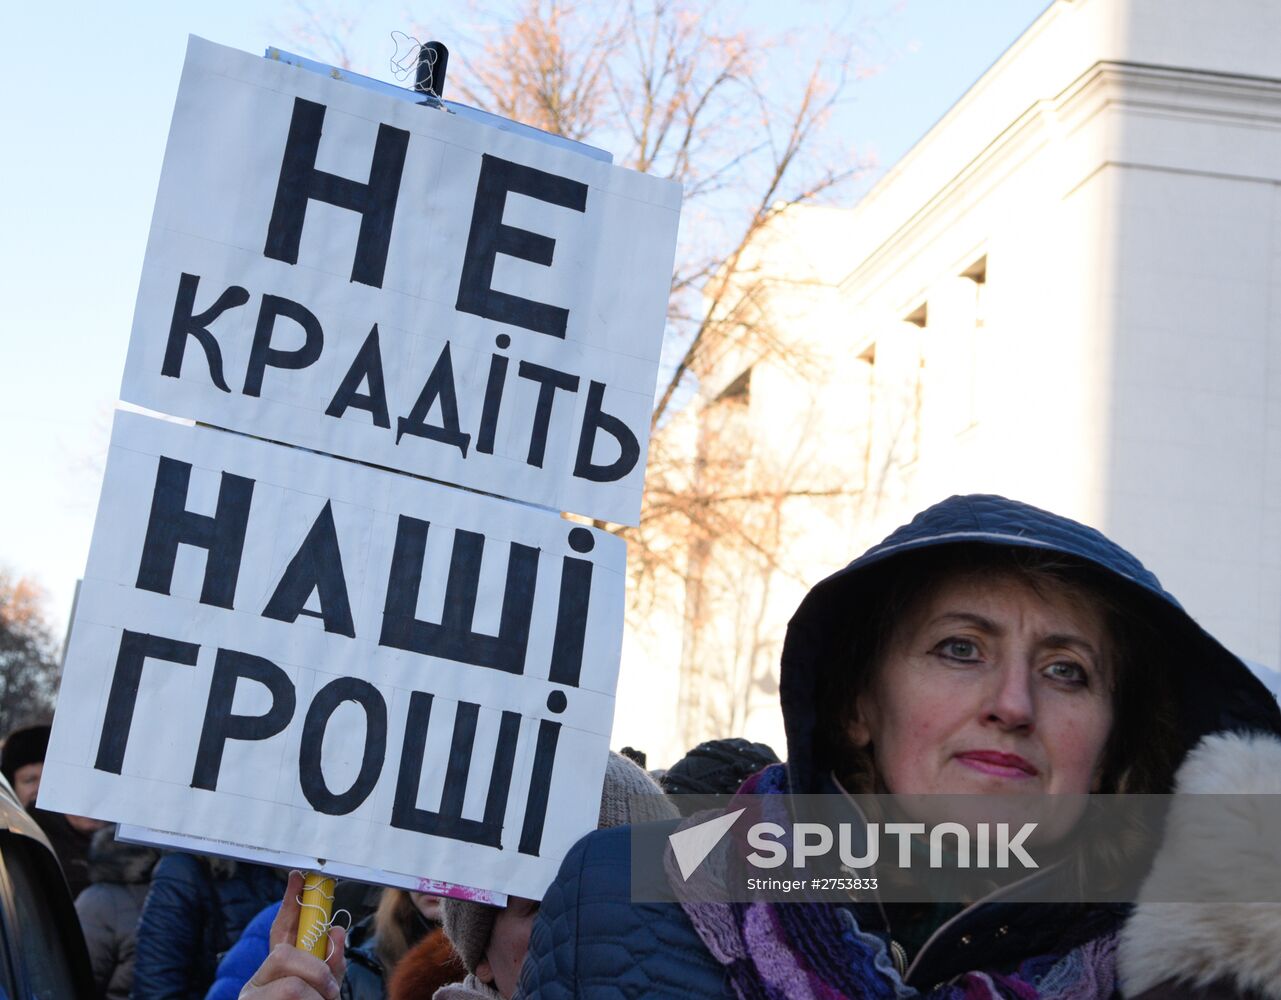 Kiev protests demanding Ukrainian Prime Minister Yatsenyuk's resignation